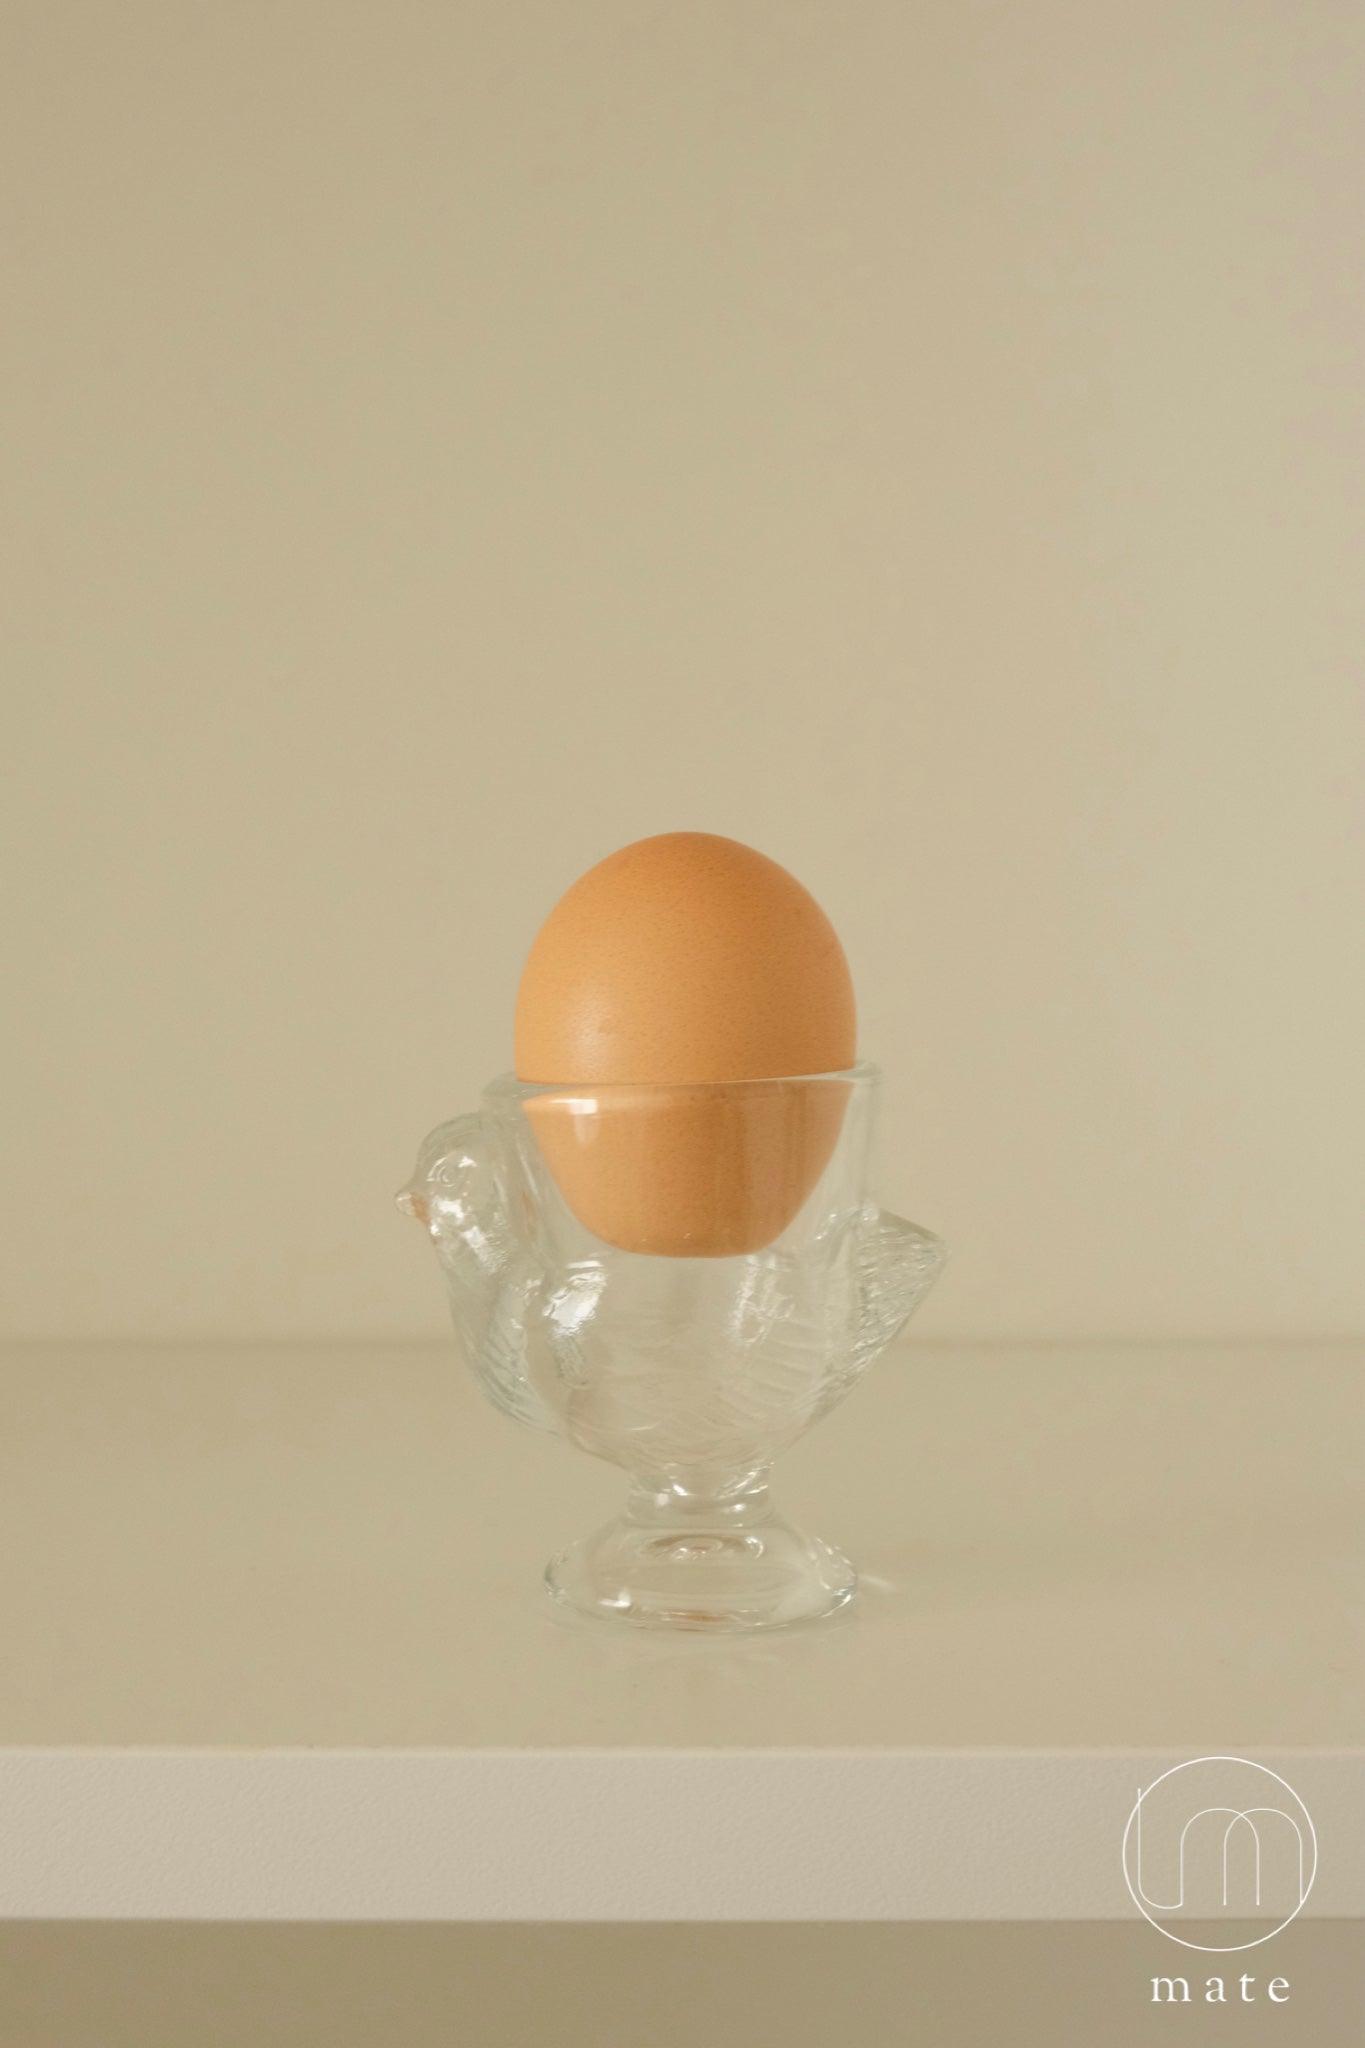 法國製玻璃雞蛋杯 - MATE